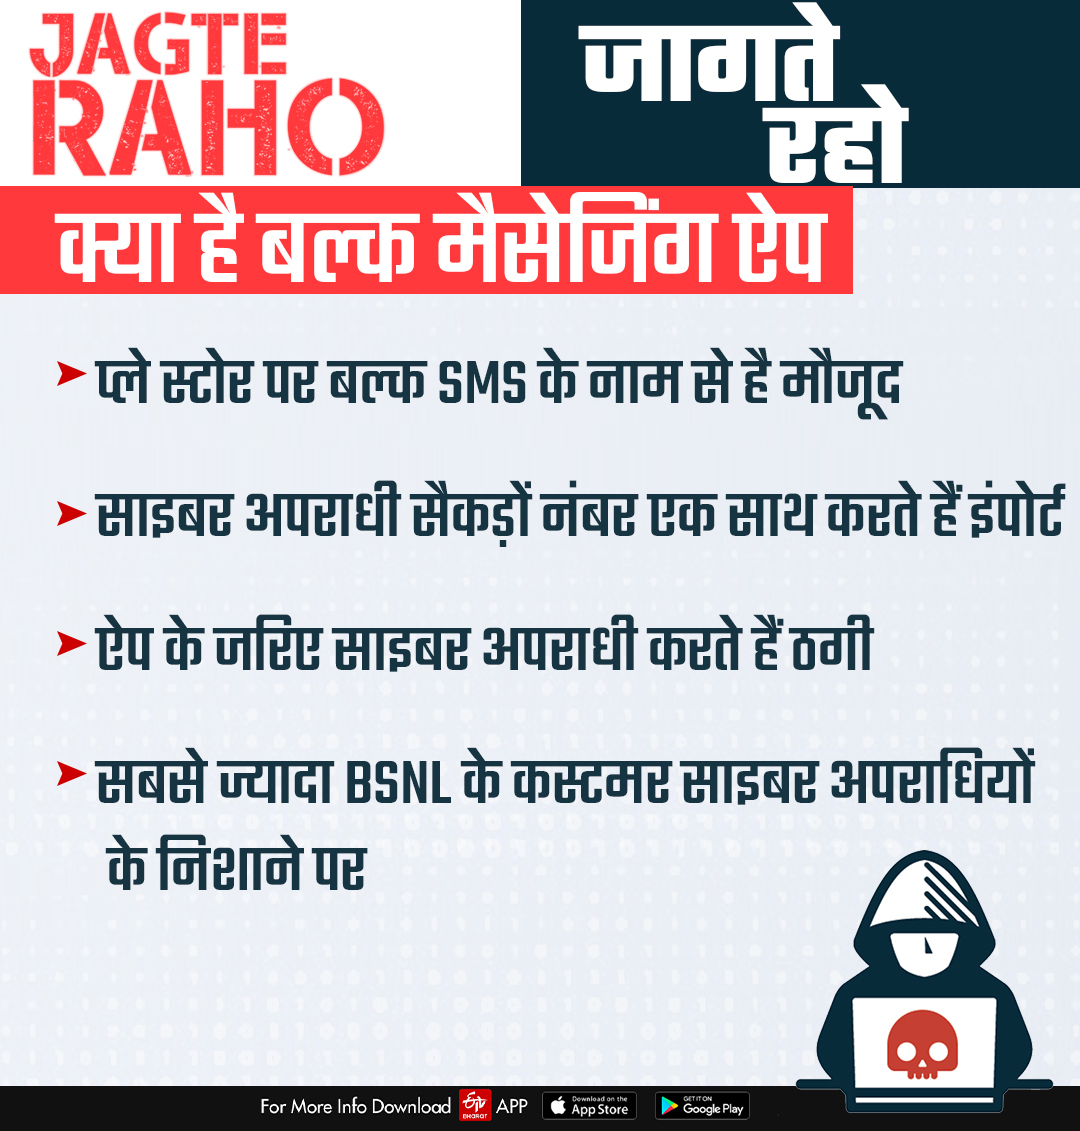 cyber-criminals-misuse-bulk-messaging-app-in-jharkhand